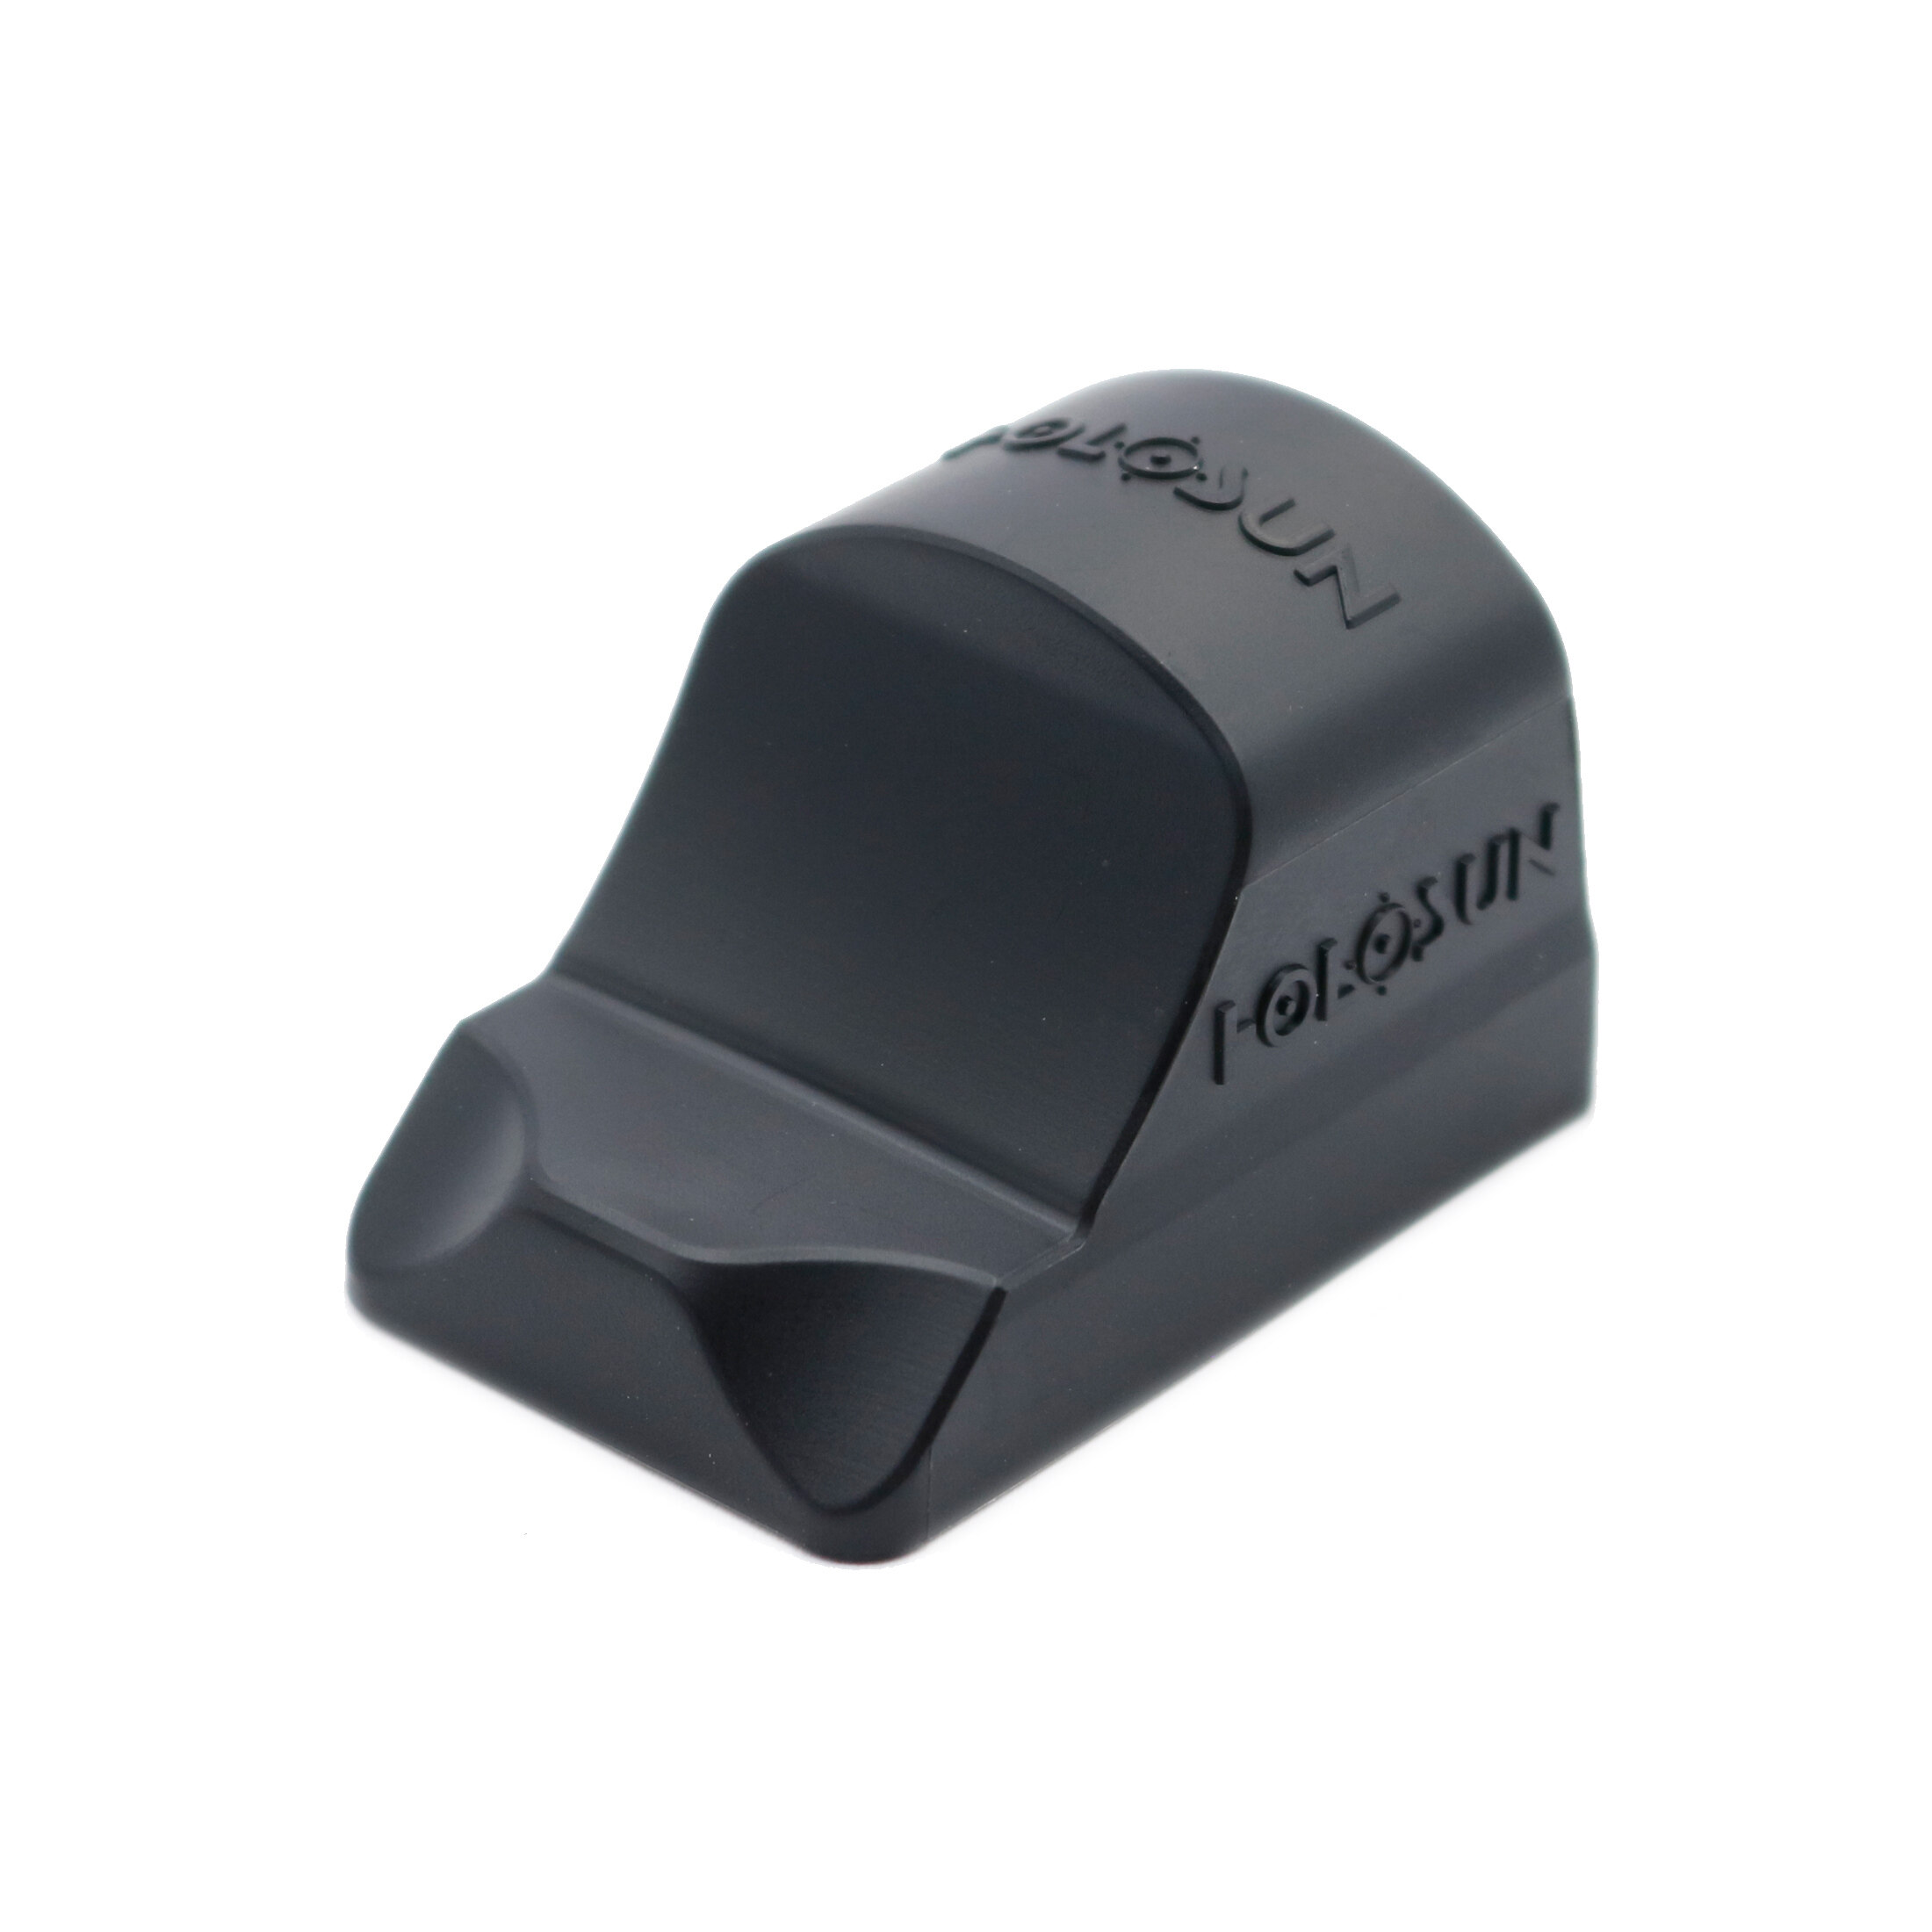 Holosun Protection Cap, accessory for Holosun 407C/507C/508T